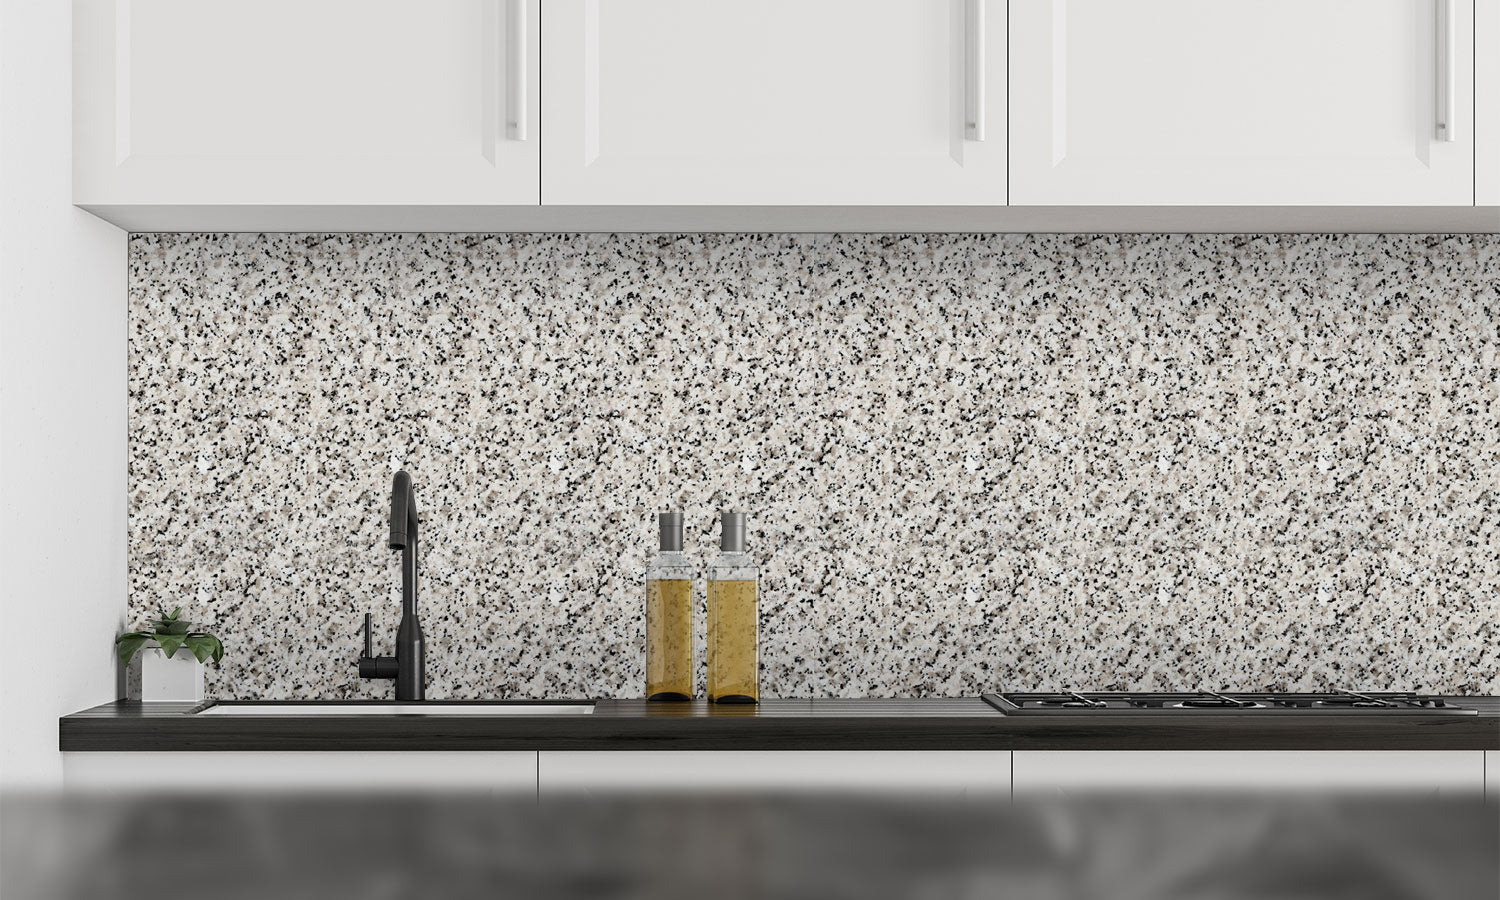 Paneli za kuhinje Light Marbe stone  -  Stakleni / PVC ploče / Pleksiglas -  sa printom za kuhinju, Zidne obloge PKU074